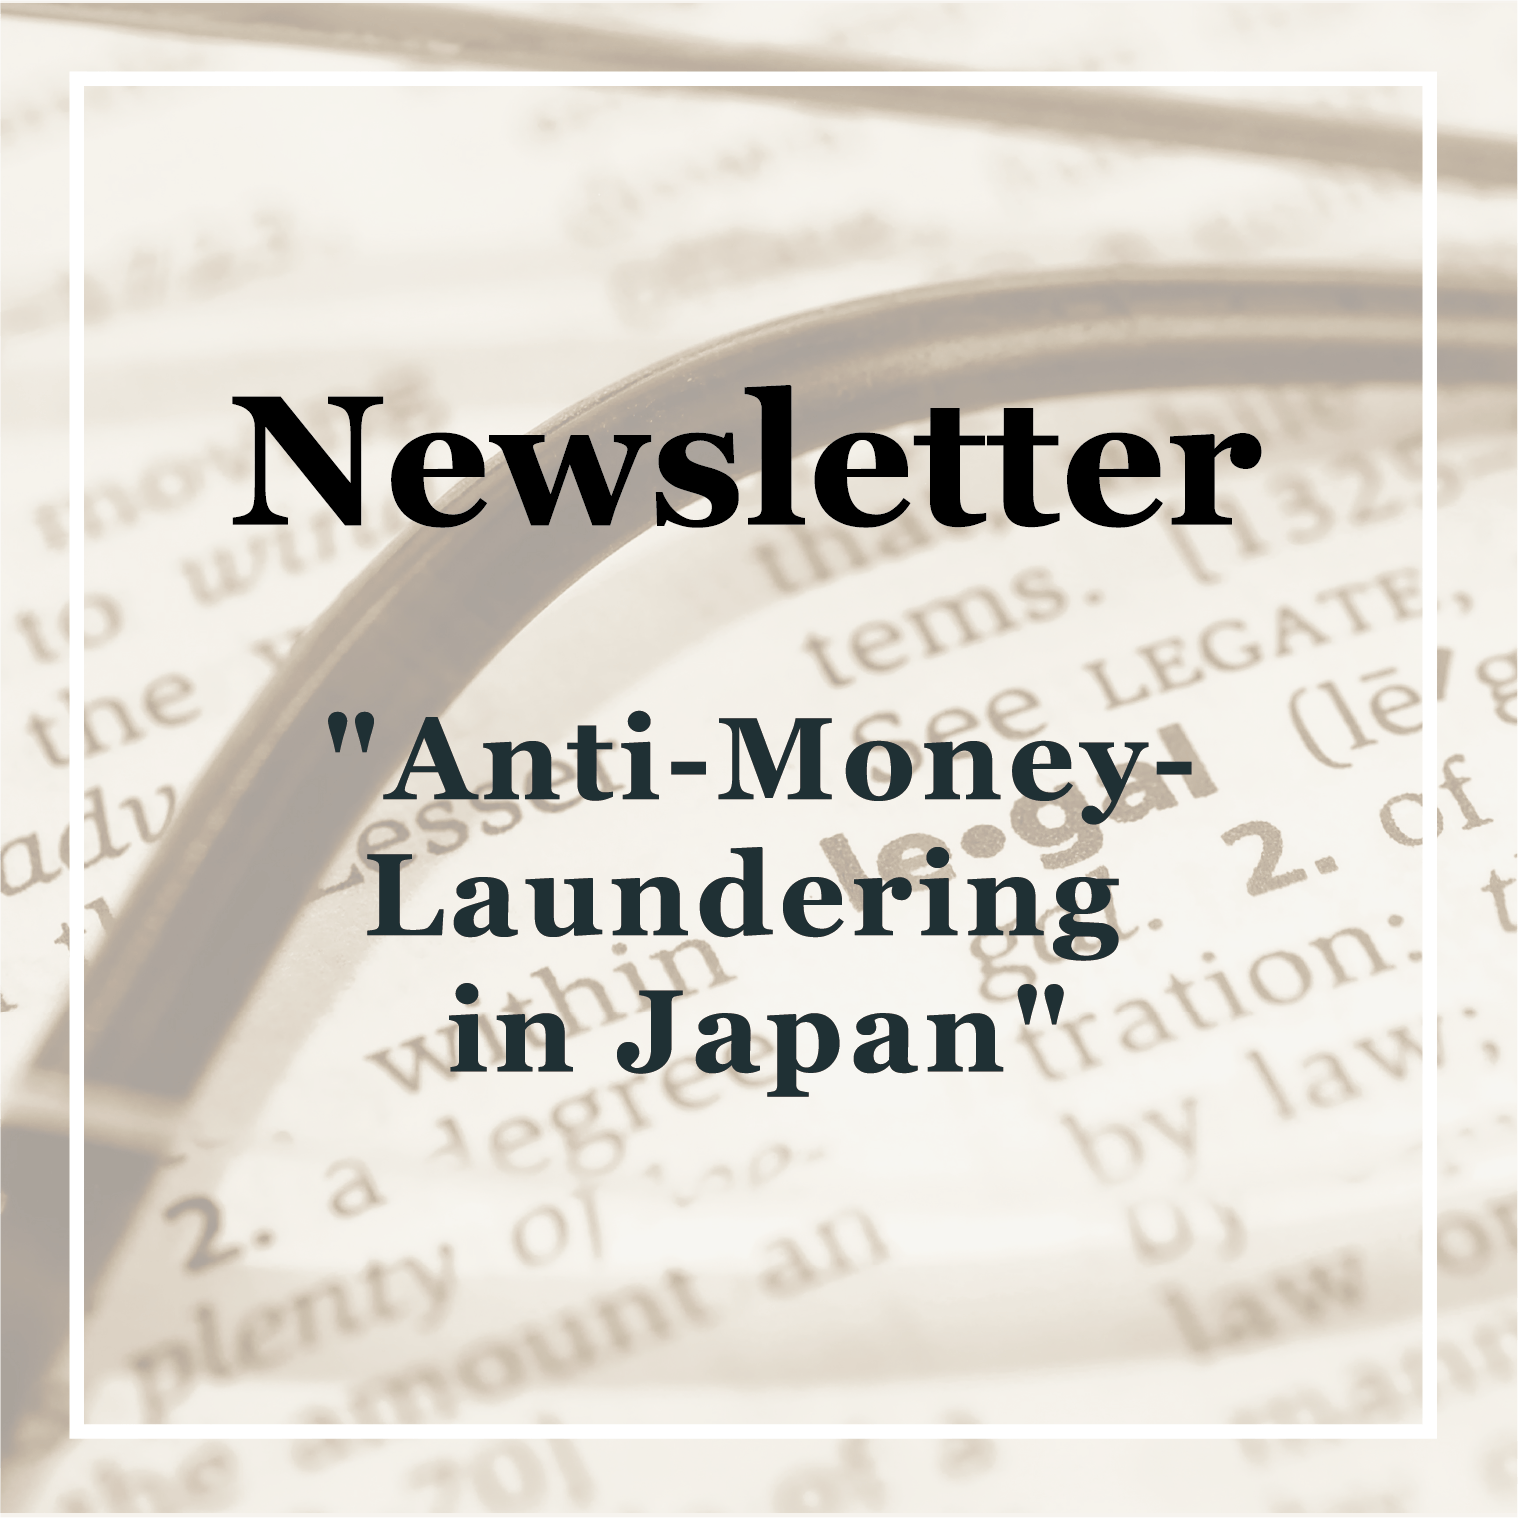 "Anti-Money-Laundering in Japan"